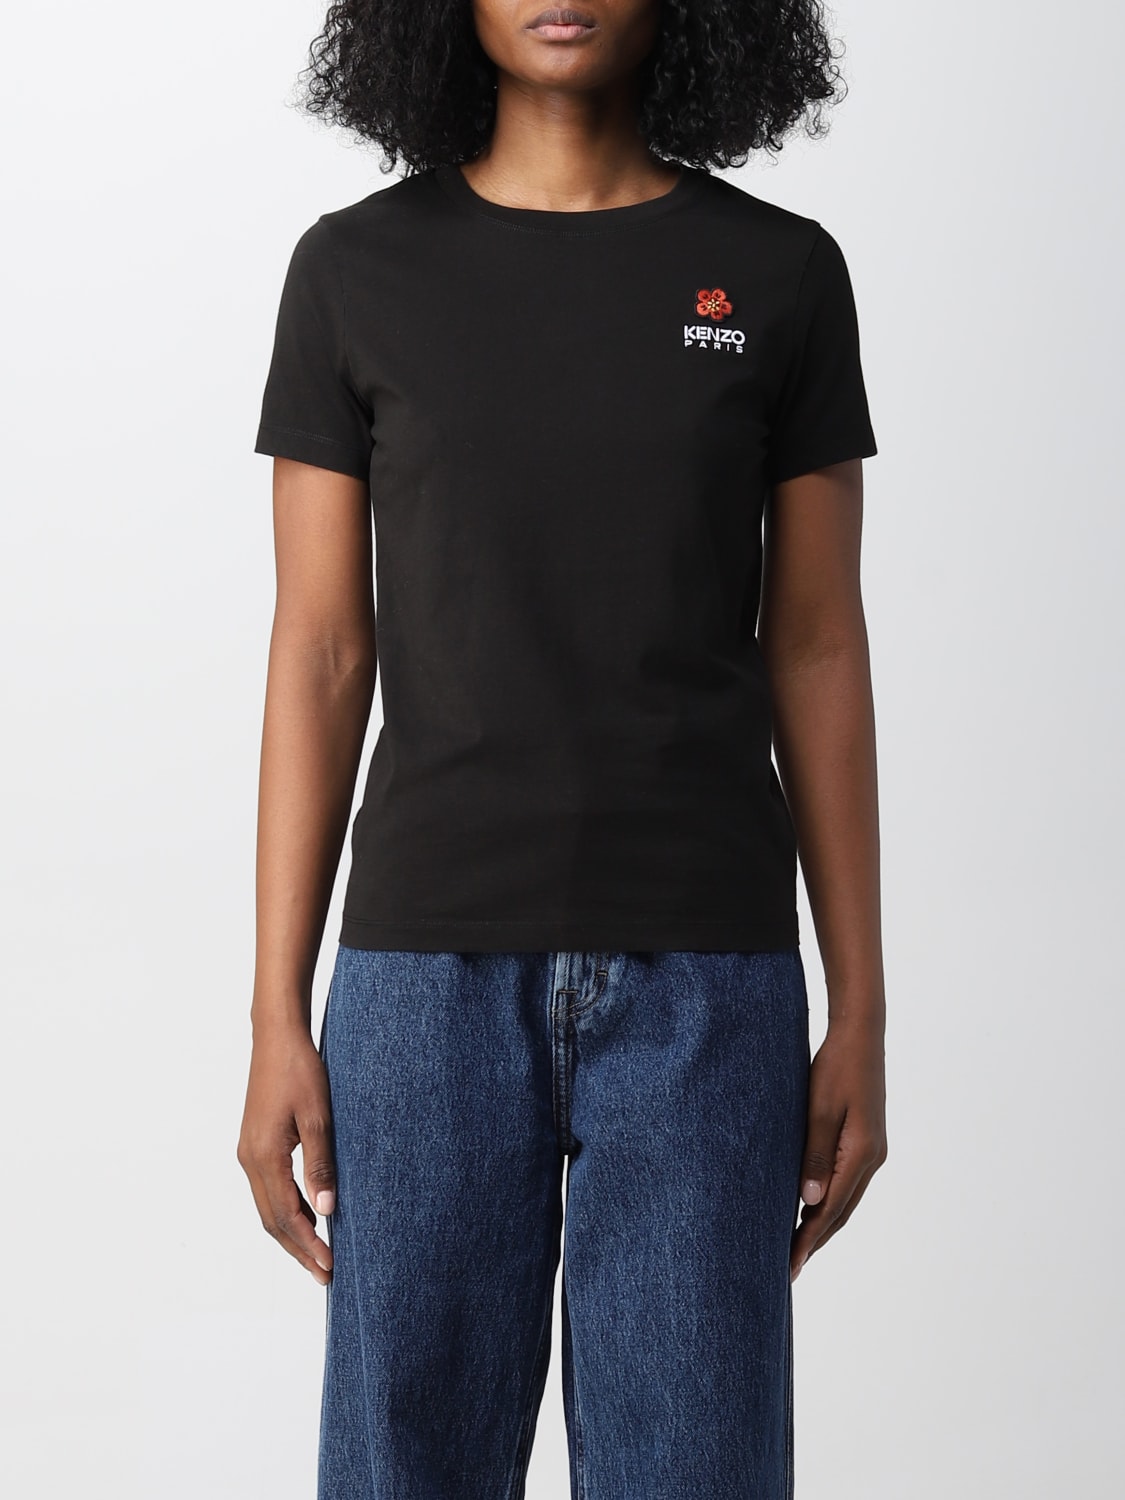 Kenzo Outlet: t-shirt for women - Black | Kenzo t-shirt FC62TS0124SO ...